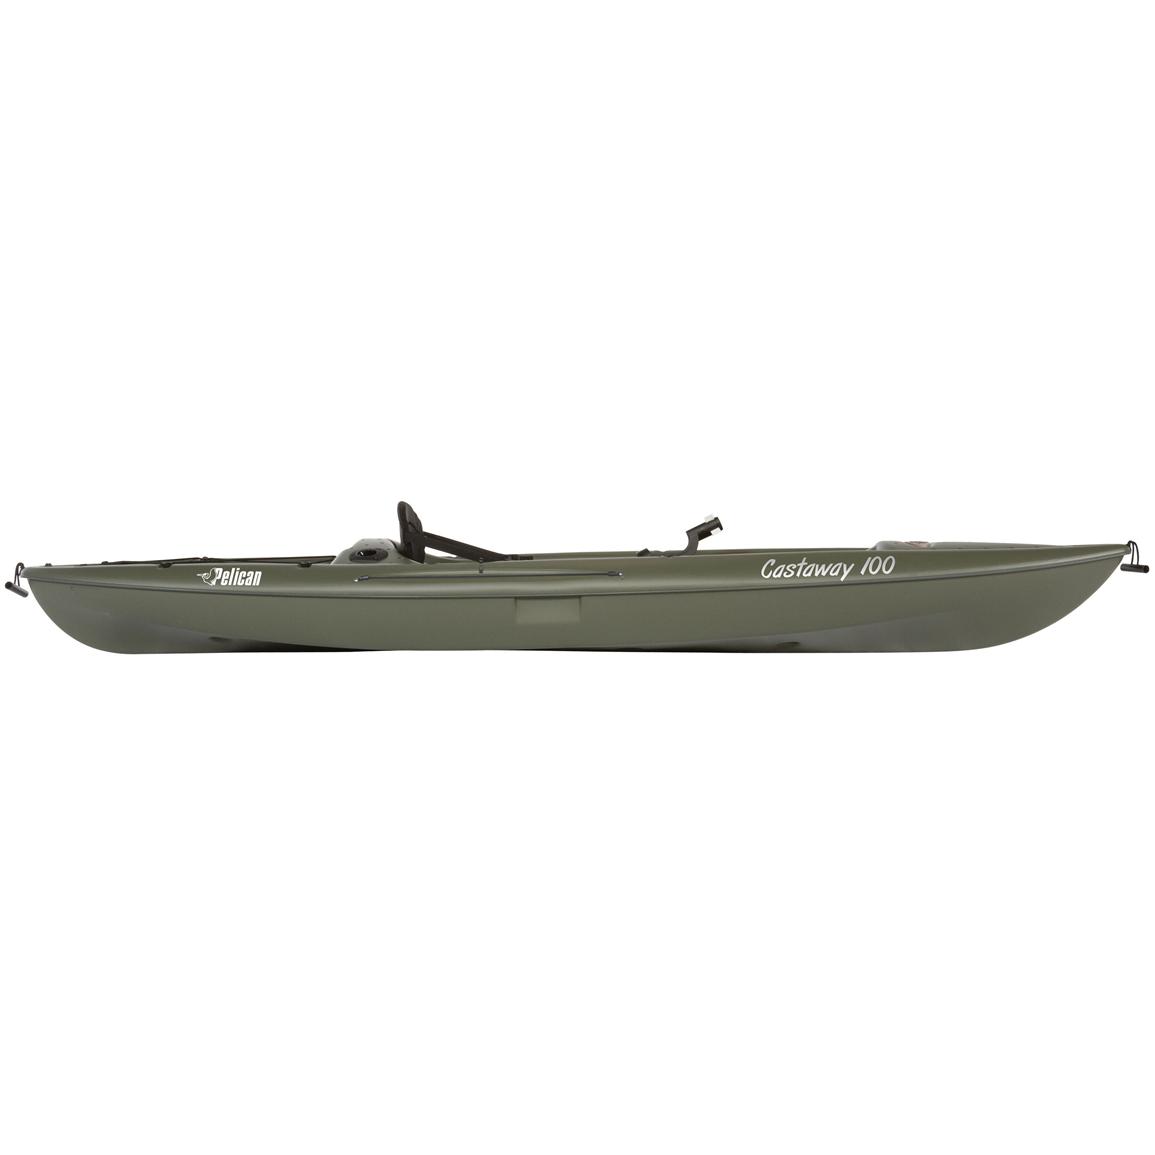 Pelican™ Castaway 100 Kayak, Khaki - 206252, Canoes & Kayaks at Sportsman's Guide1155 x 1155